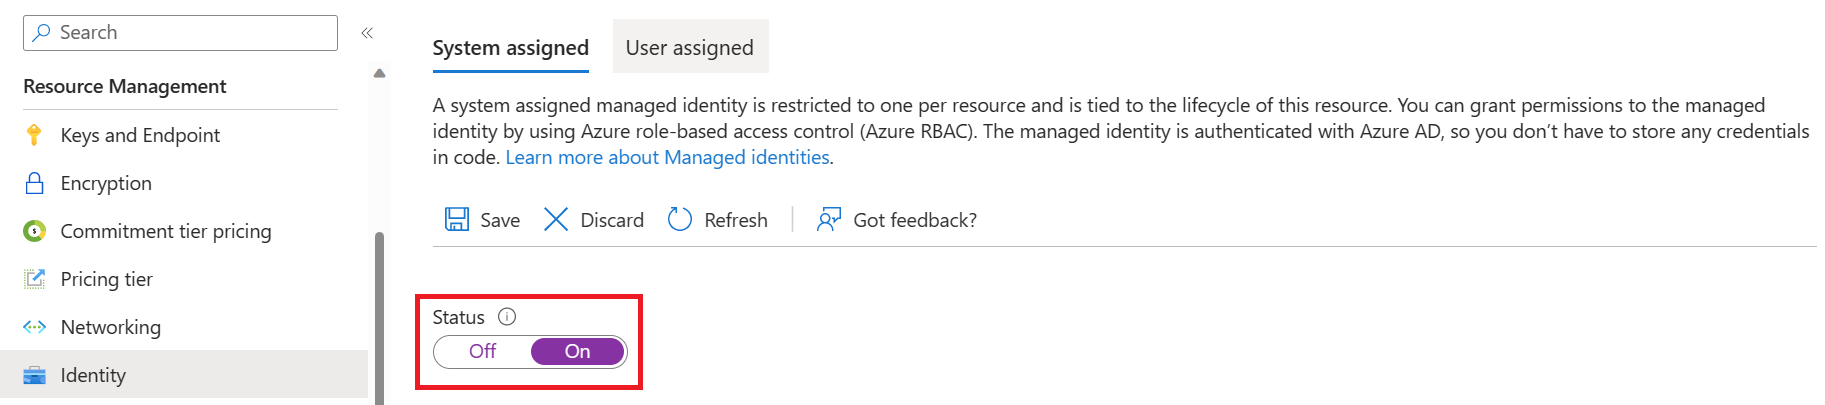 Screenshot: resource management identity tab in the Azure portal.